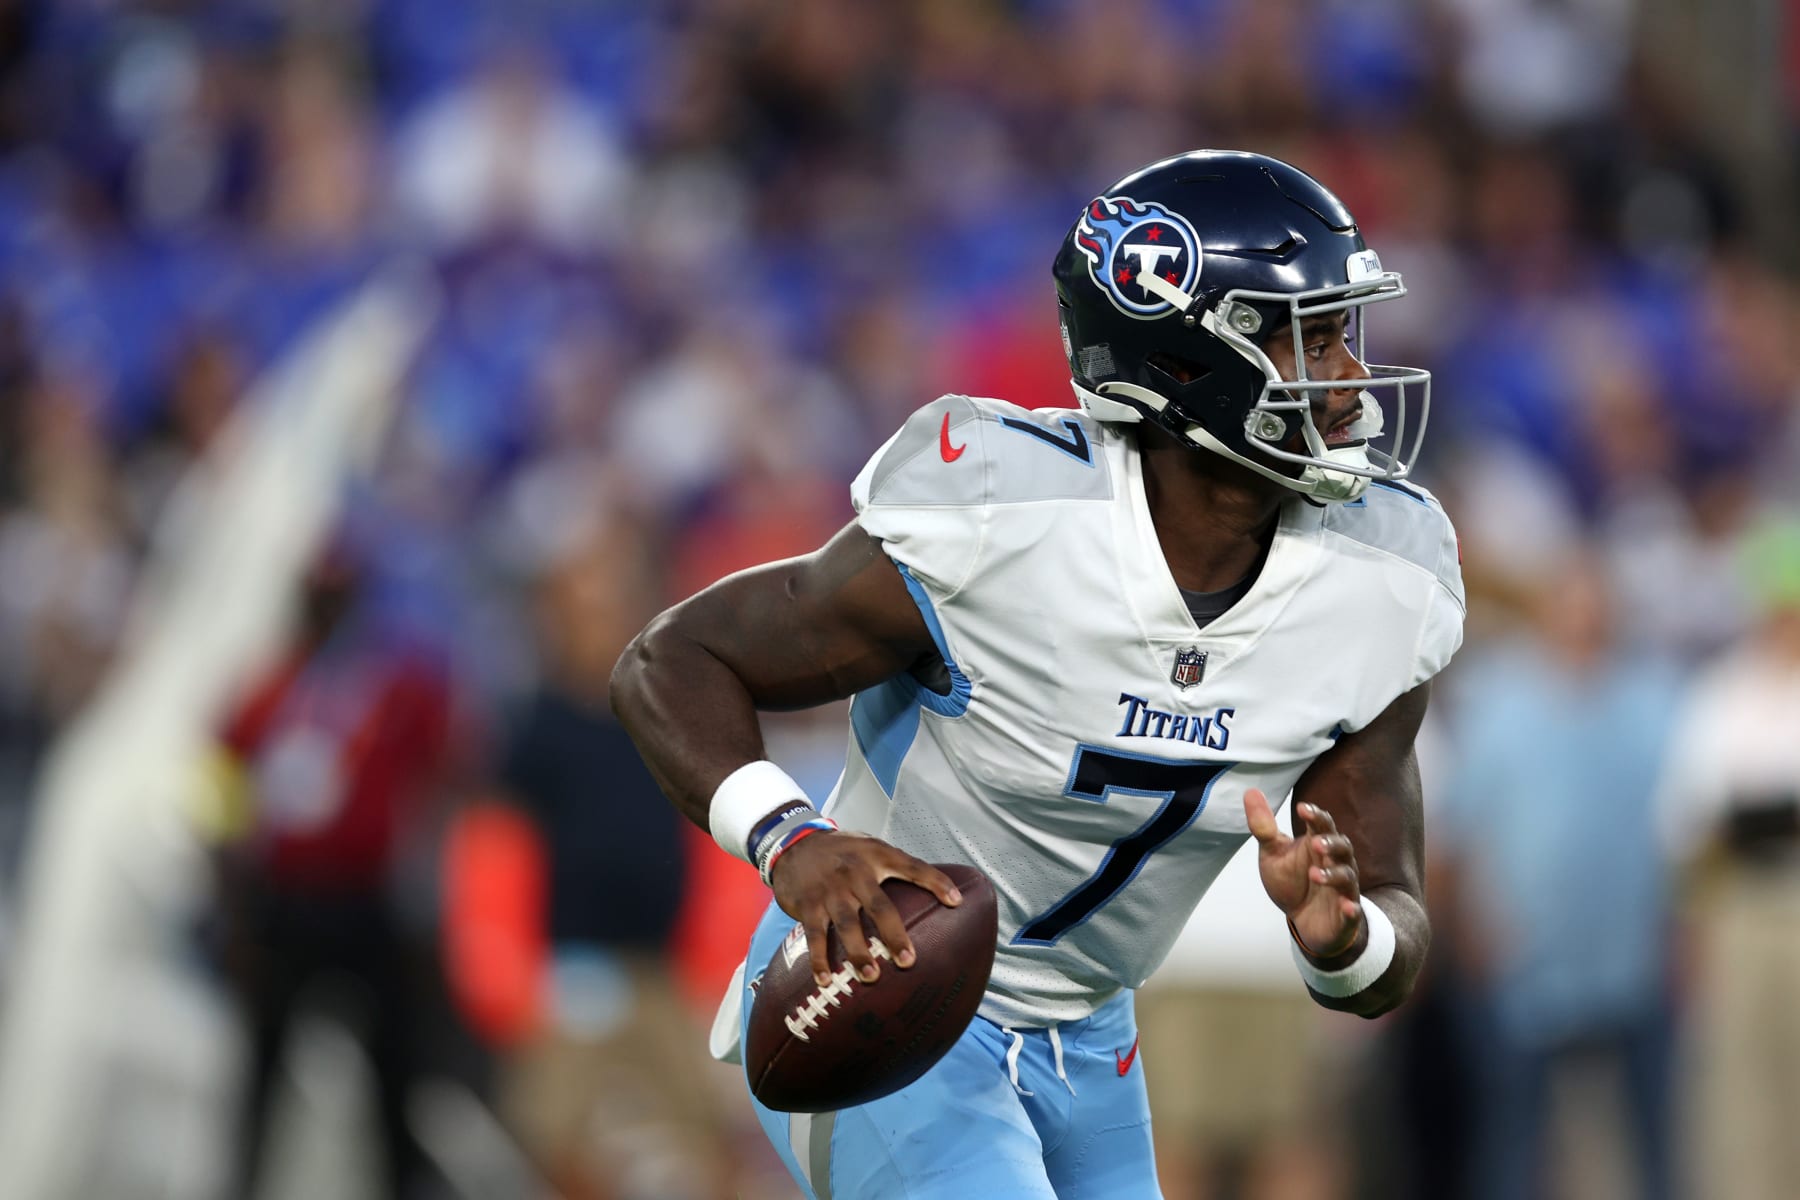 Malik Willis shines in NFL preseason debut with Titans